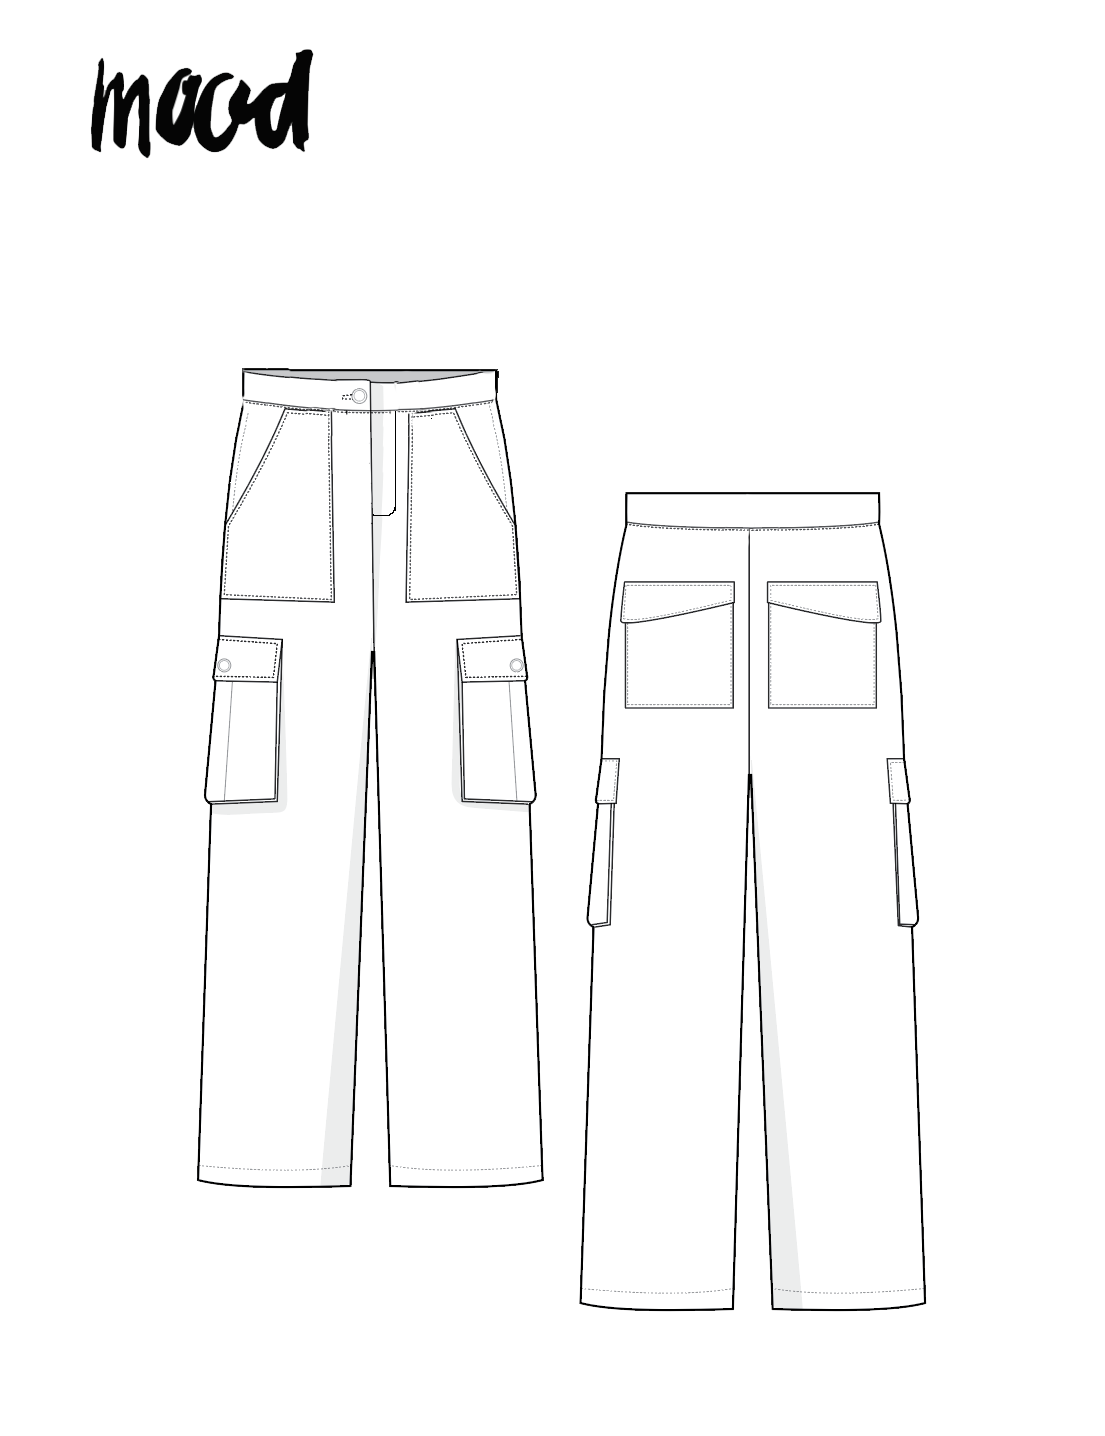 11+ Designs Cargo Pants Pattern - SineadCristina